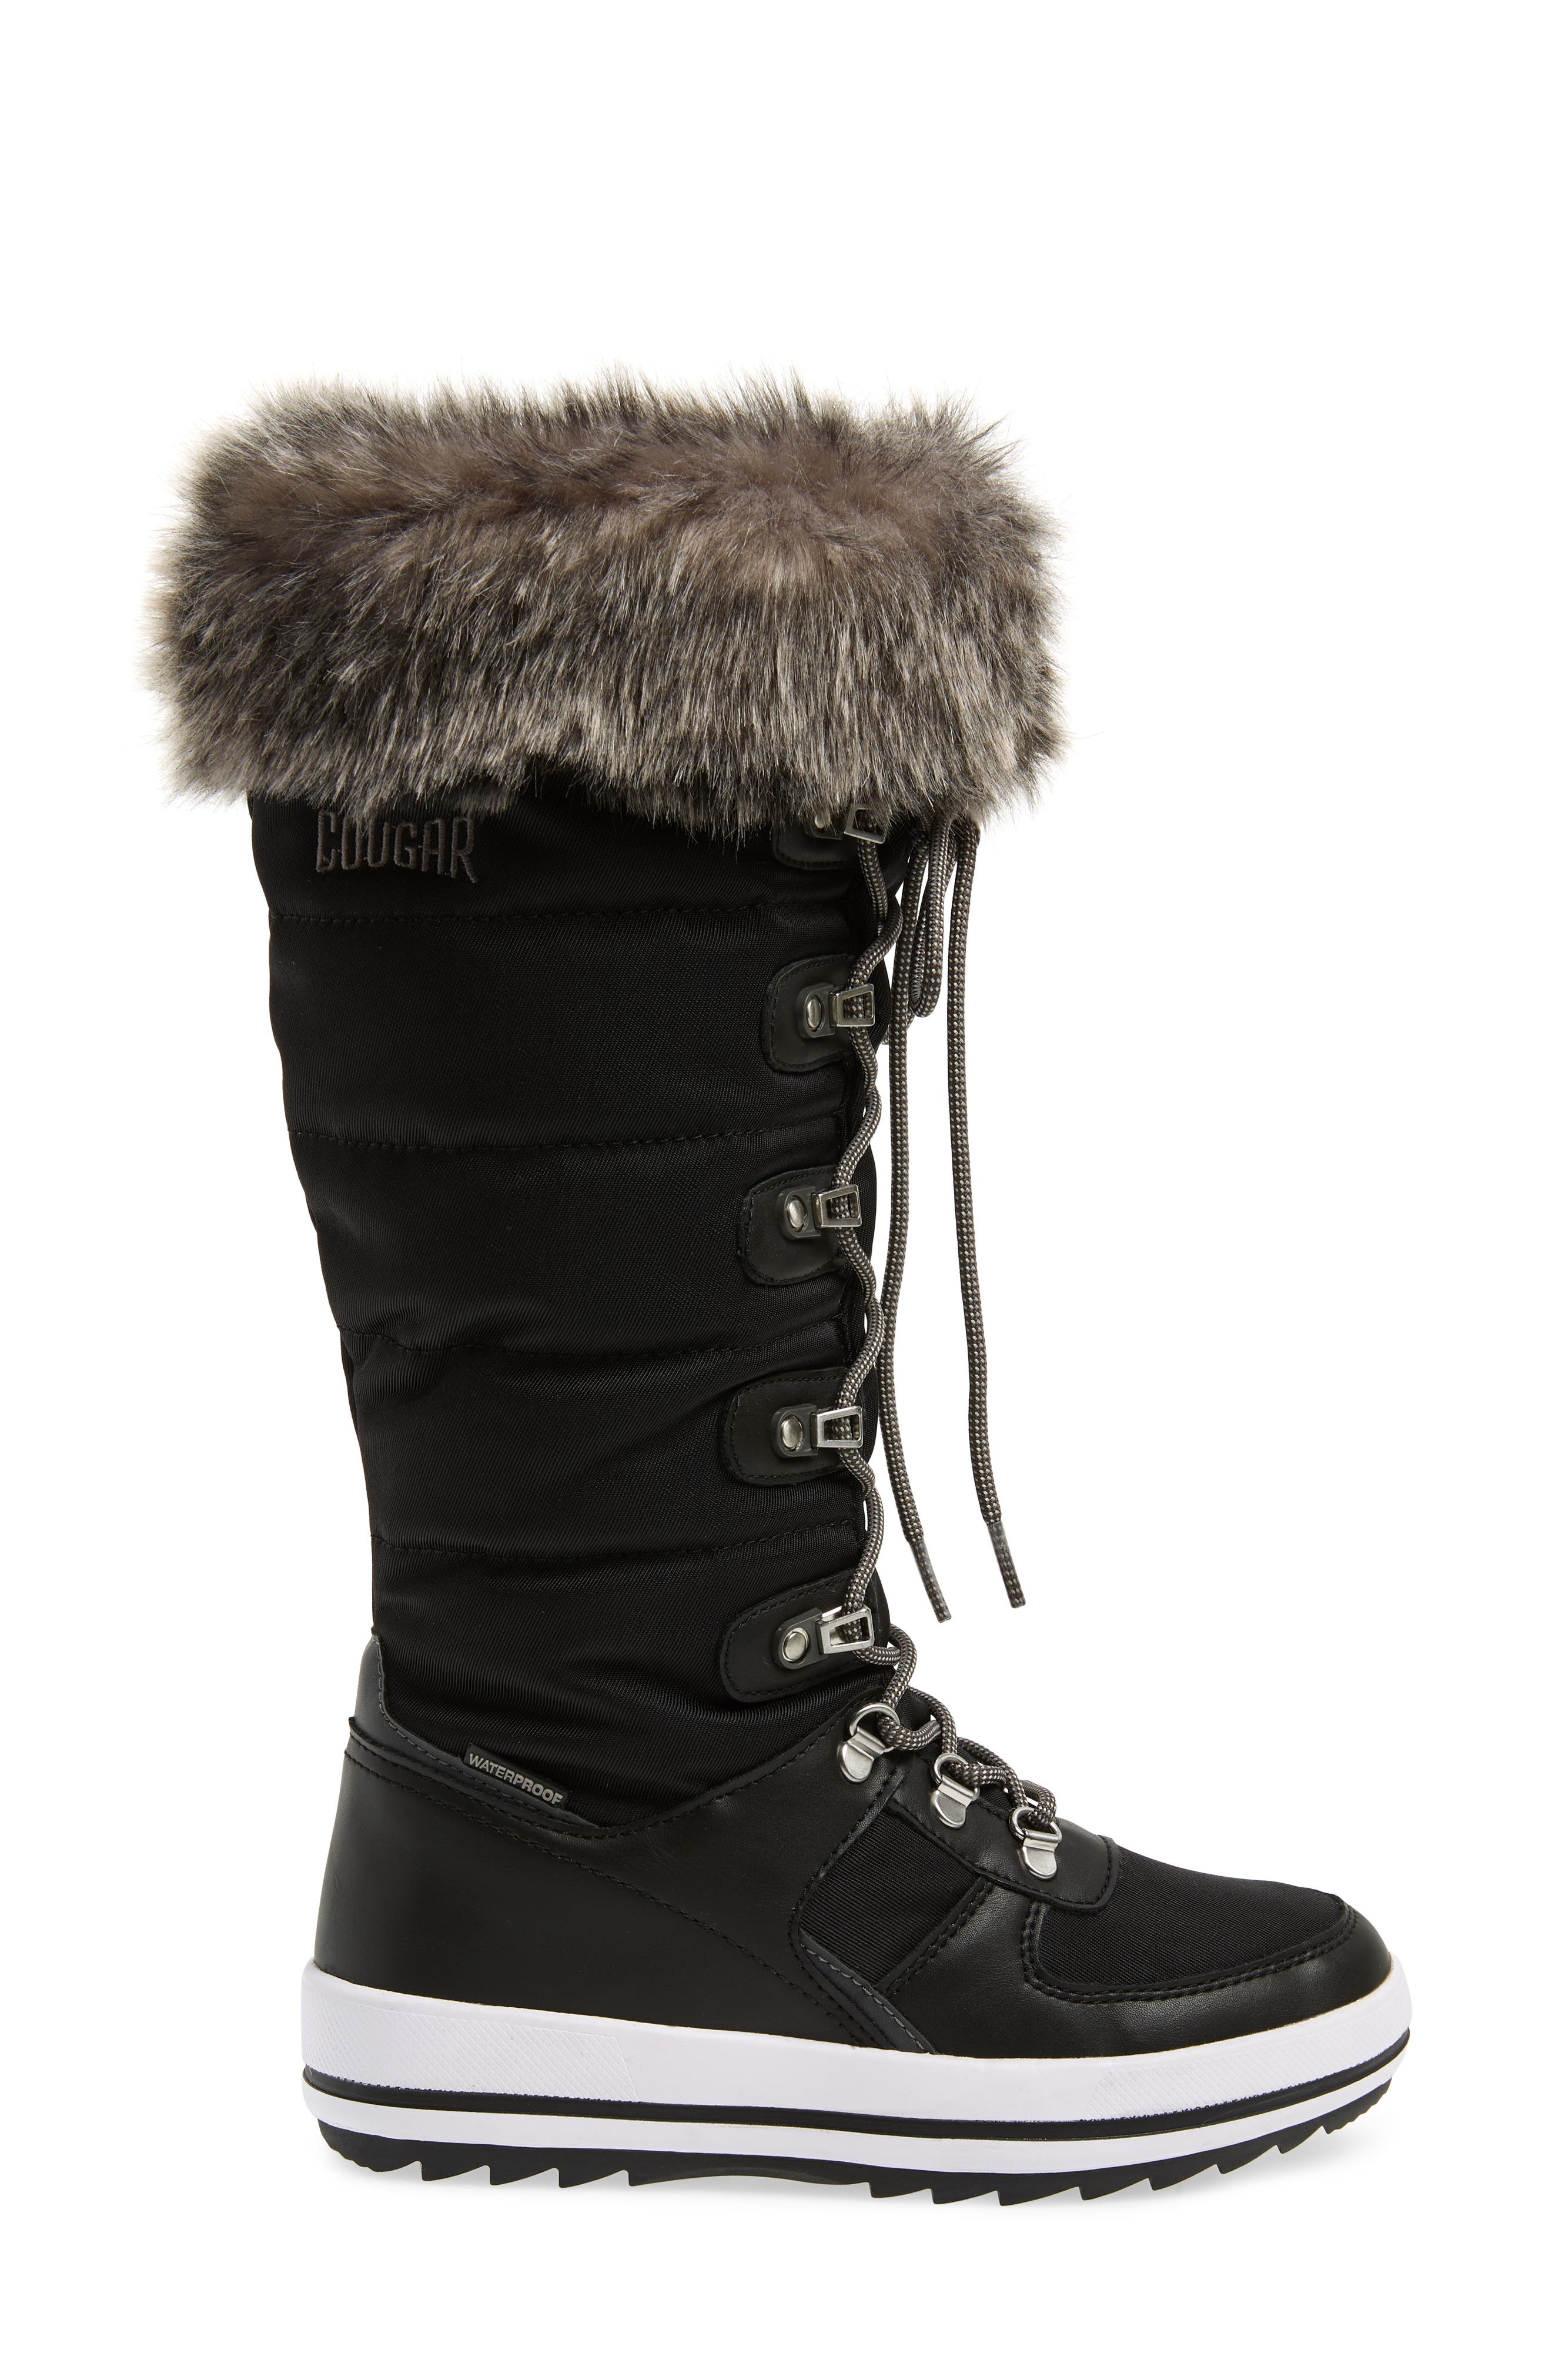 Cougar | Vesta Faux Fur Lined Waterproof Snow Boot | Nordstrom Rack